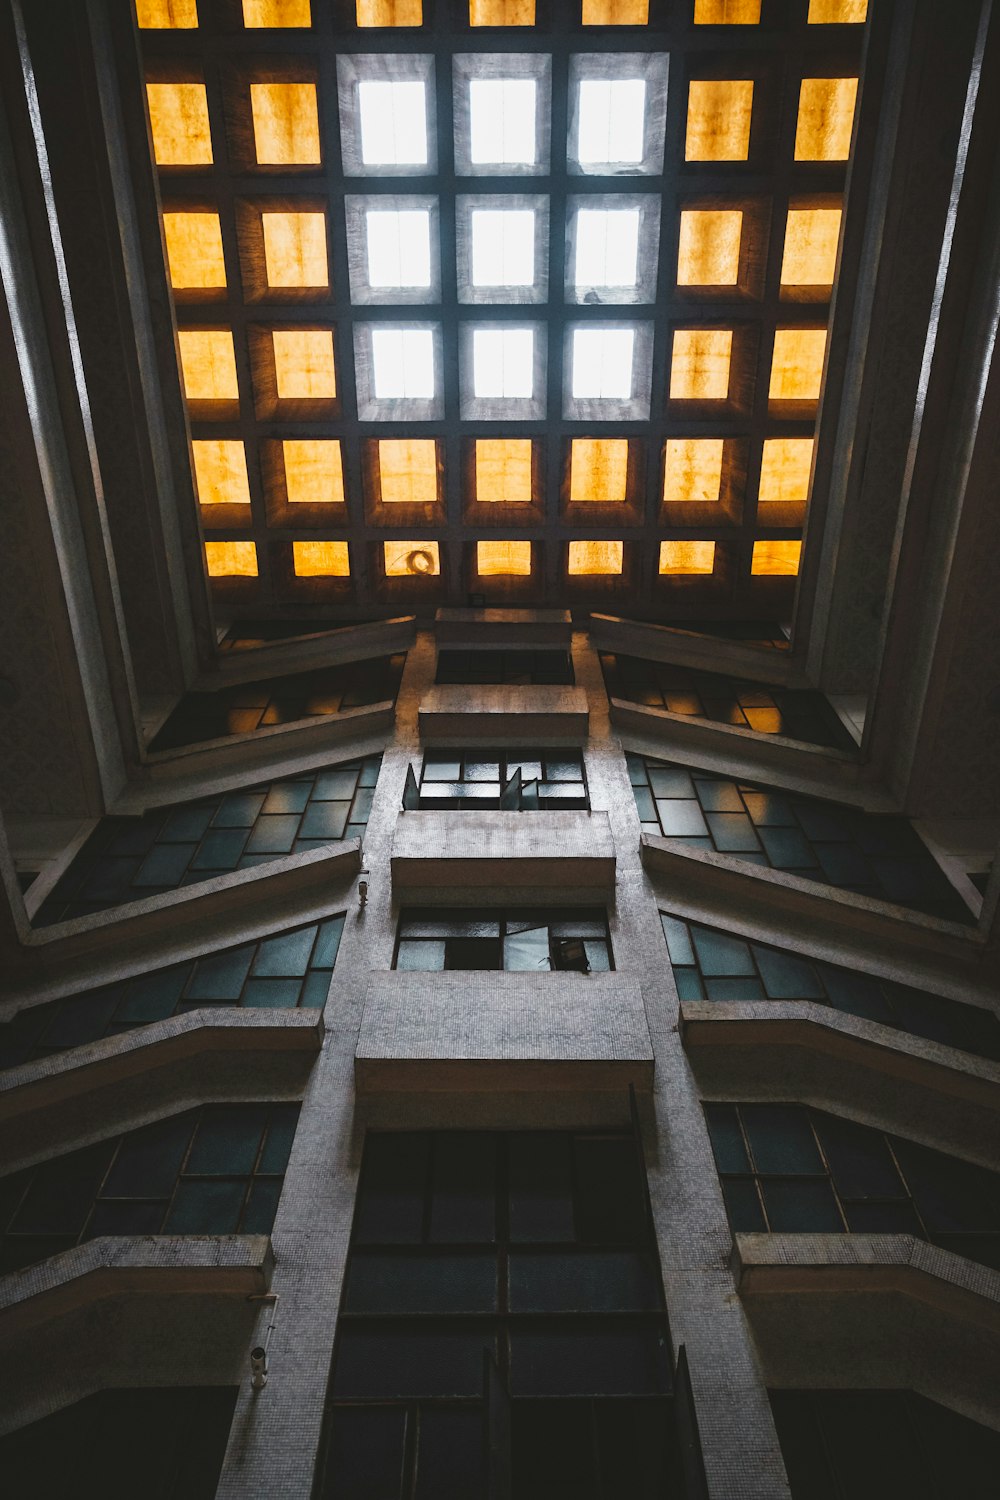 brown concrete building